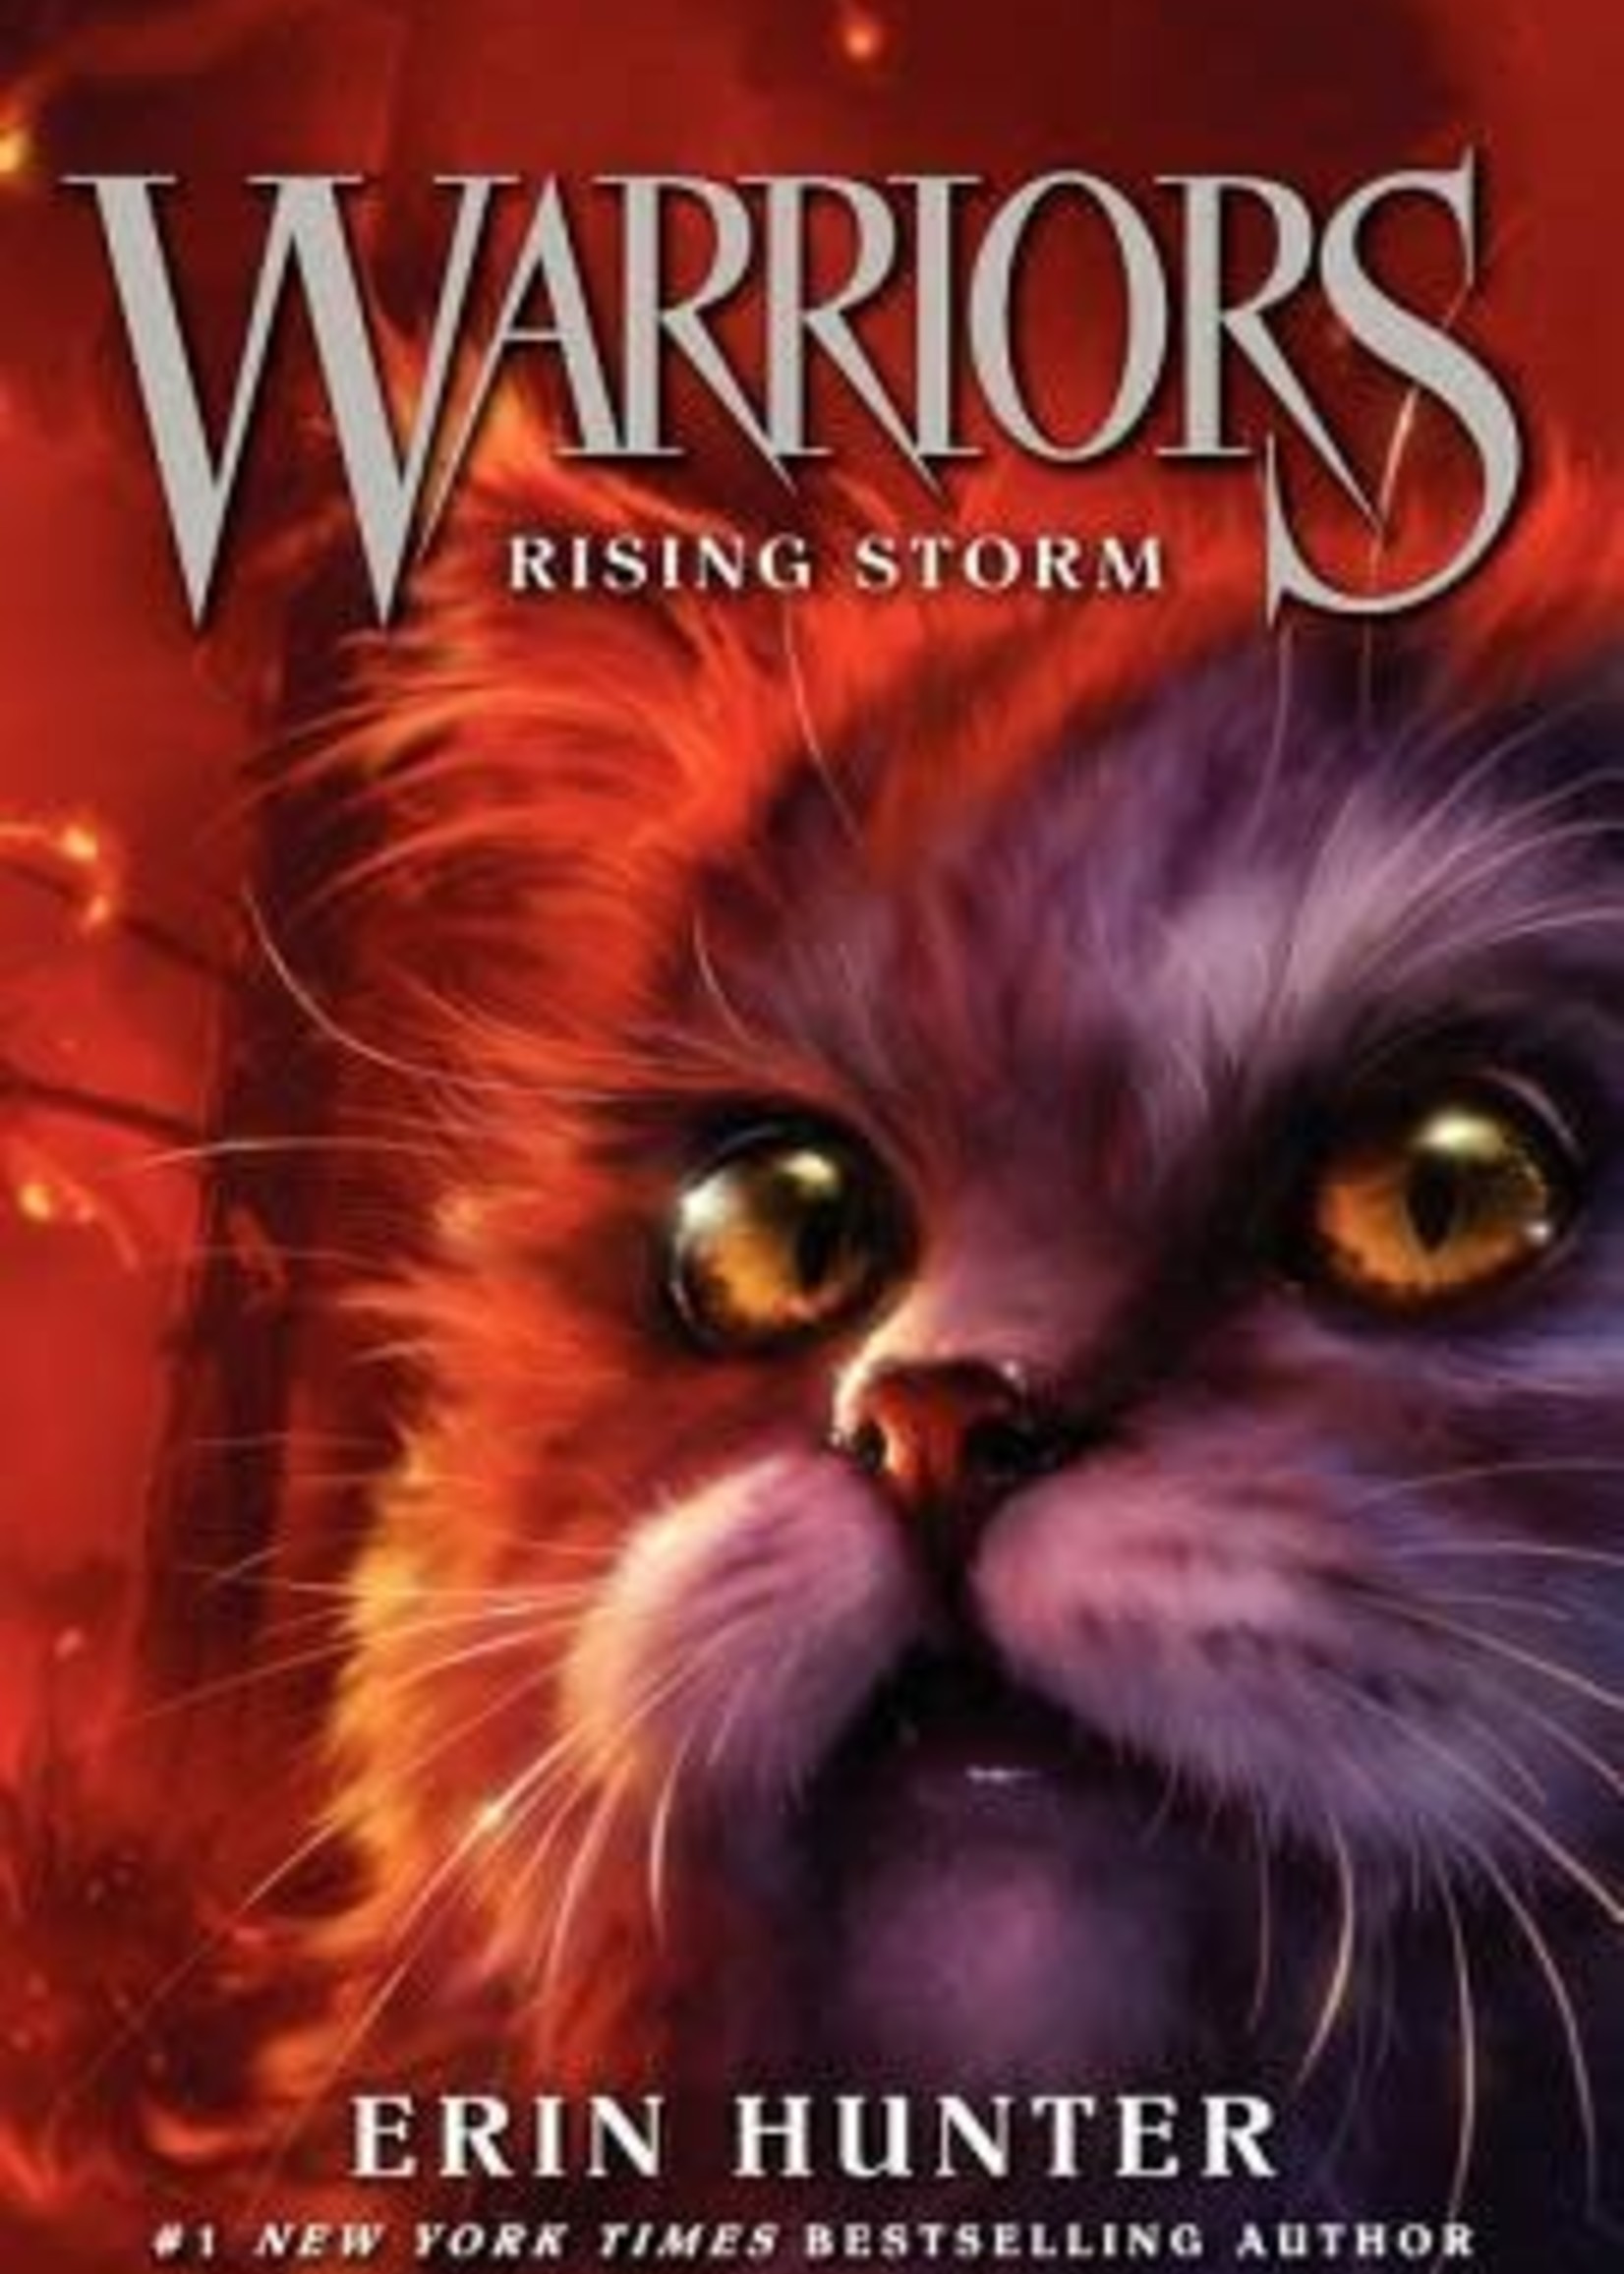 Rising Storm (Warriors #4) by Erin Hunter